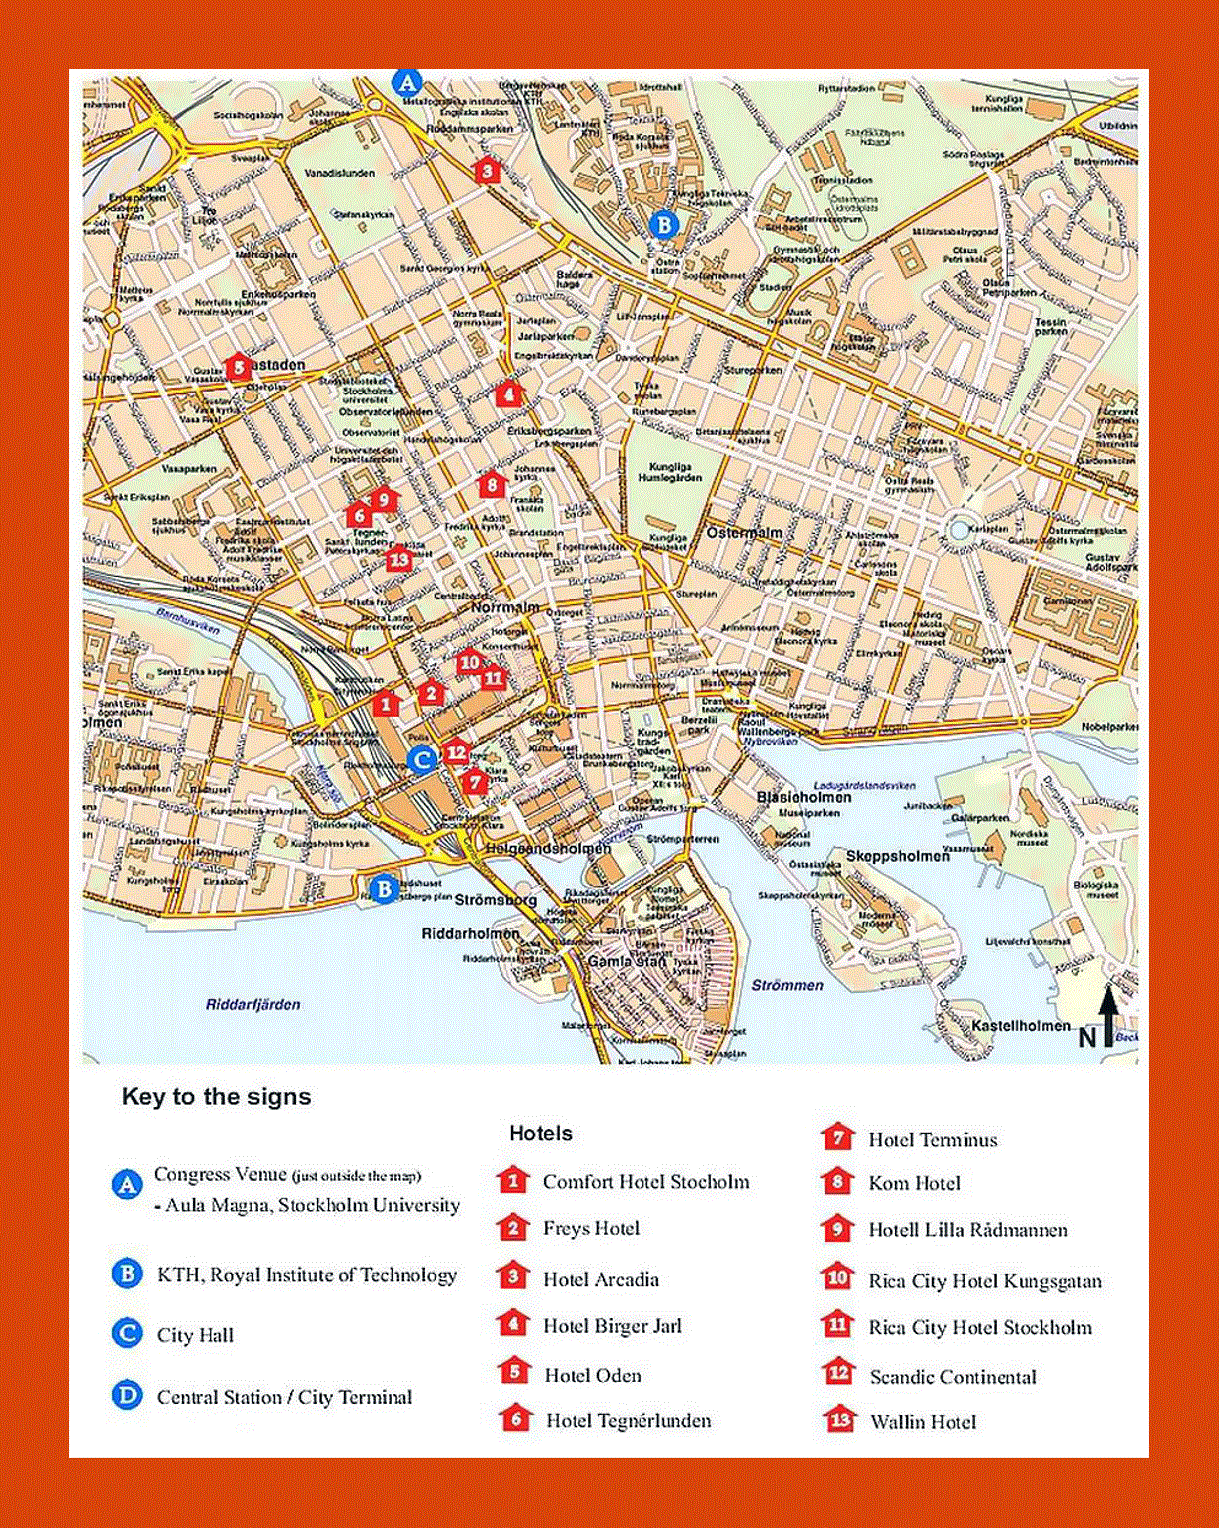 Hotels map of Stockholm city center